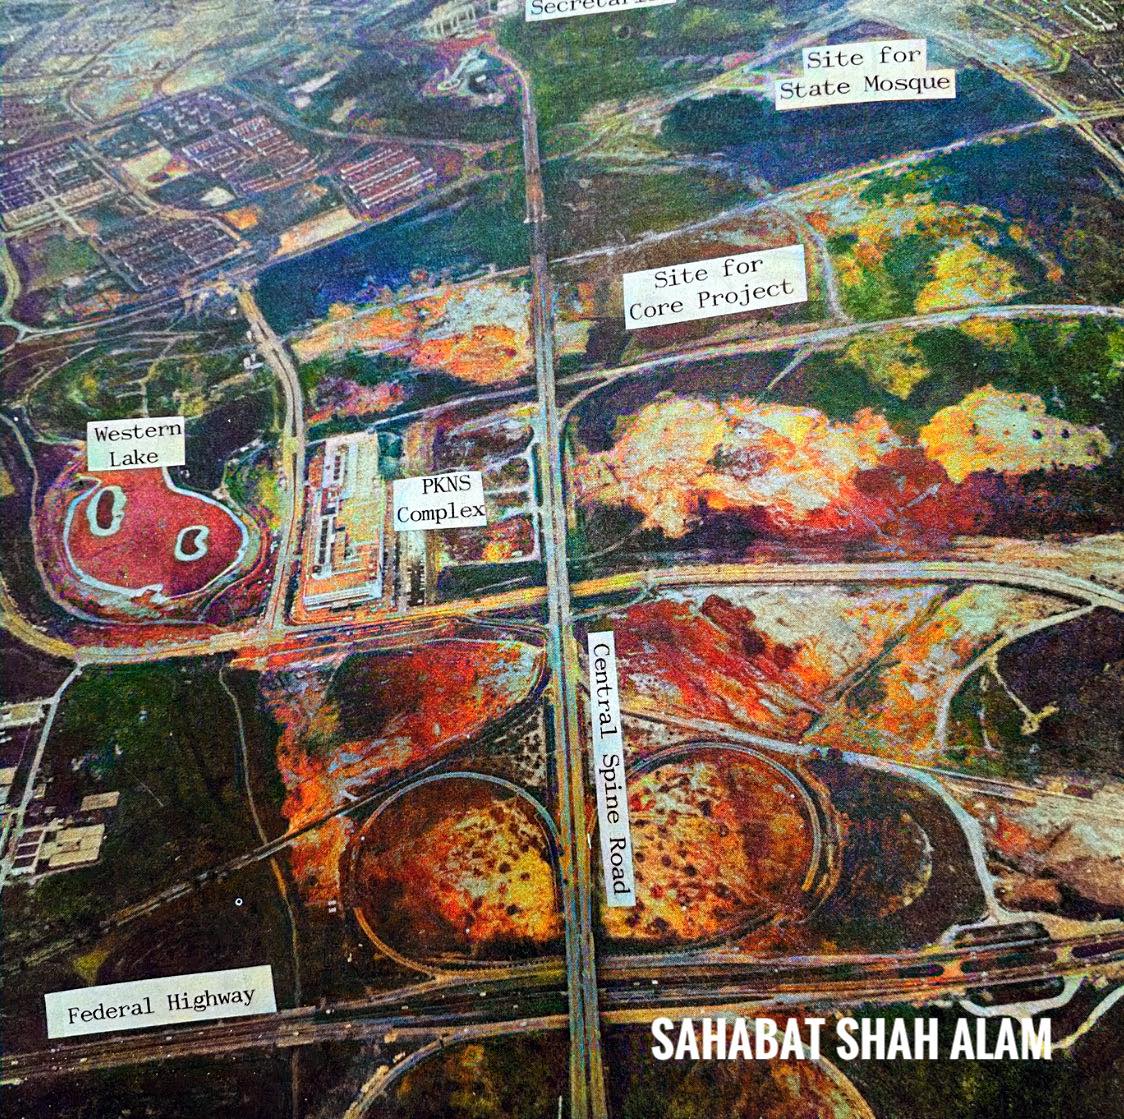 Gambar lama Shah Alam 1982
Kompleks PKNS siap dibuka tahun 1980
Rumah Seksyen 4 pun dah siap.
SUK masih dlm pembinaan.
even Tasik pun belum siap.
credit: sahabat shah alam